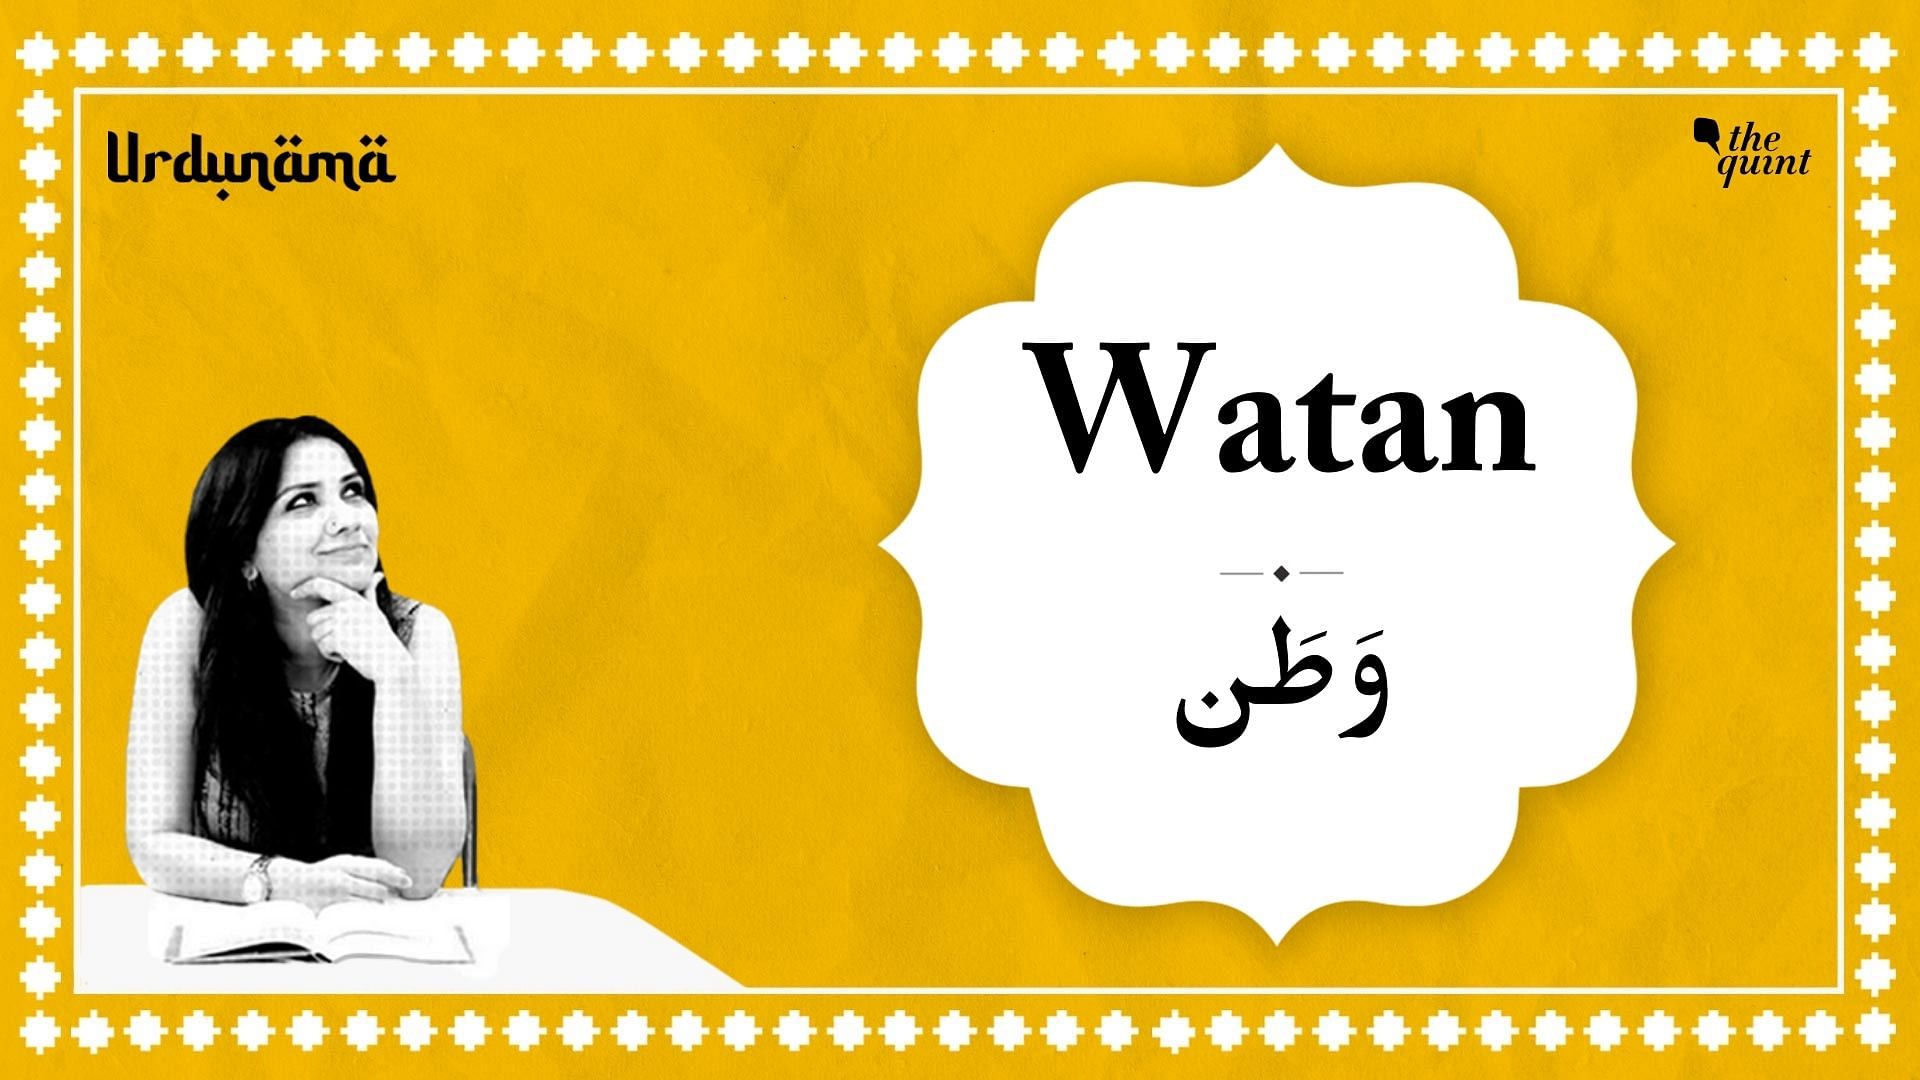 <div class="paragraphs"><p>Urdunama episode on Watan</p></div>